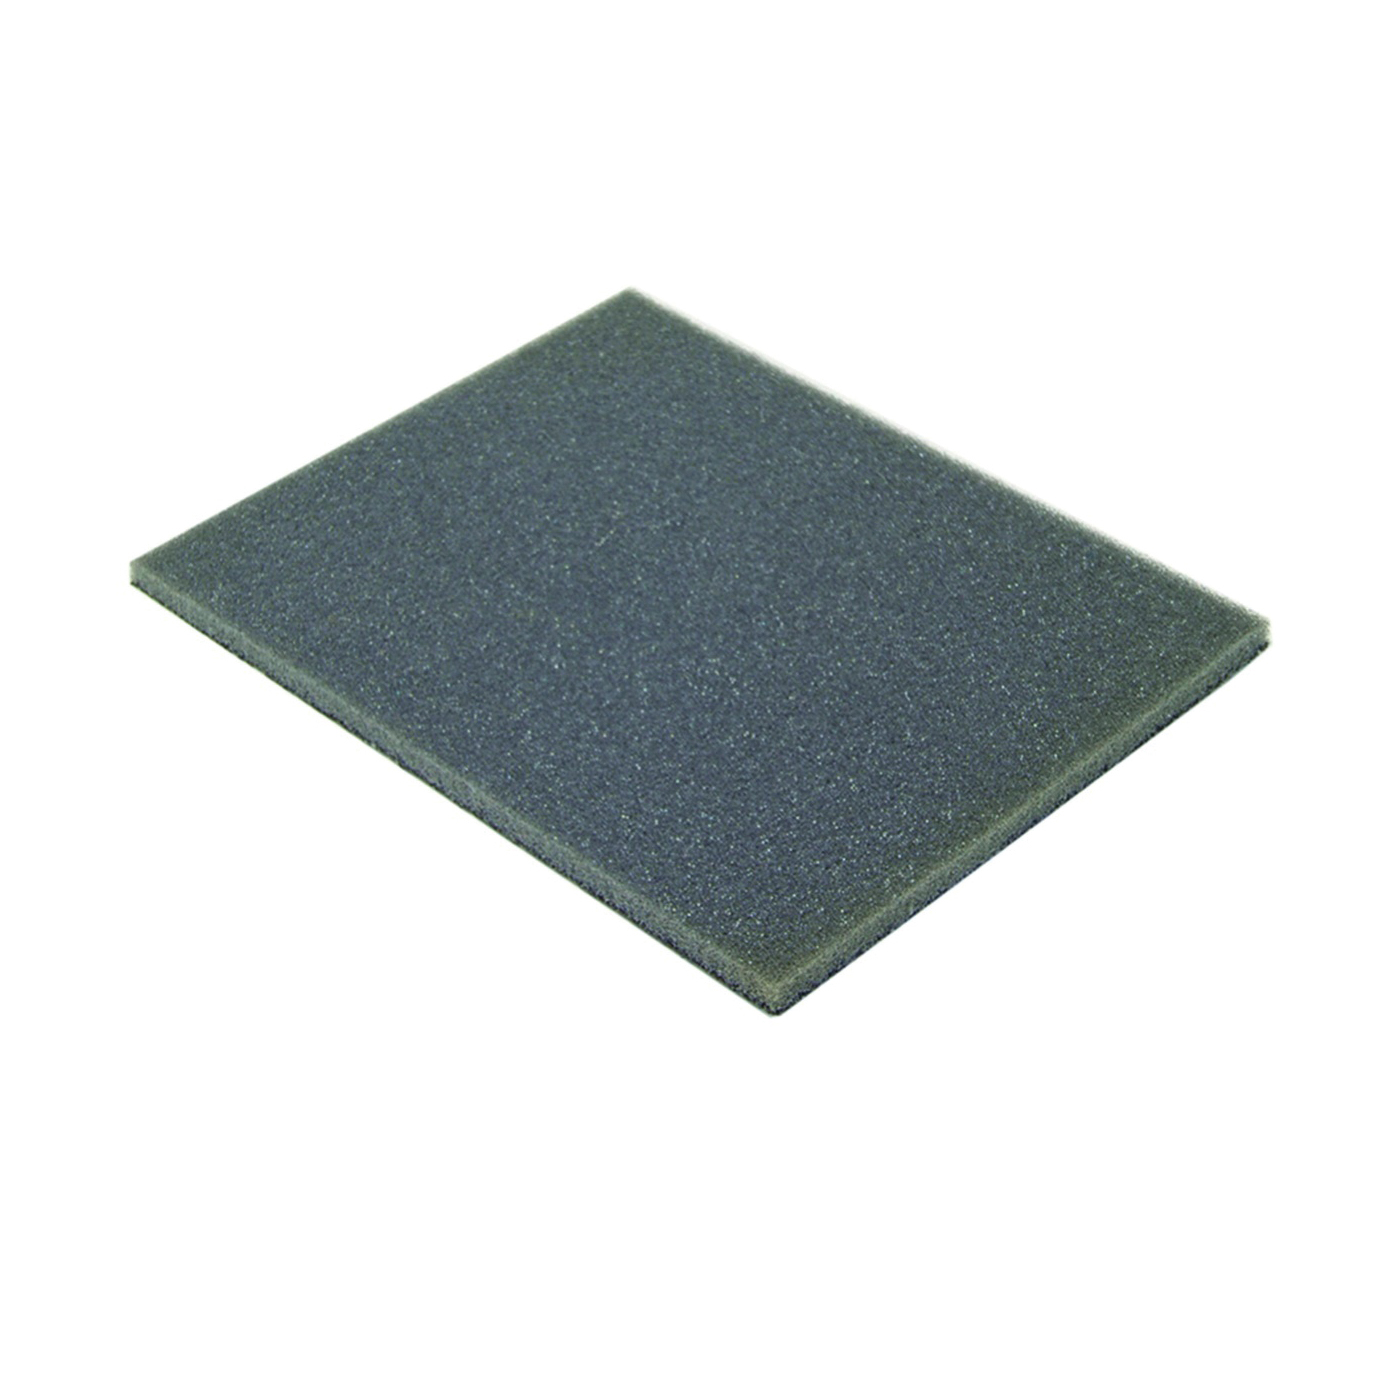 MultiSand 00937 Sanding Sponge, 5-1/2 in L, 4-1/2 in W, Extra Fine, Aluminum Oxide Abrasive